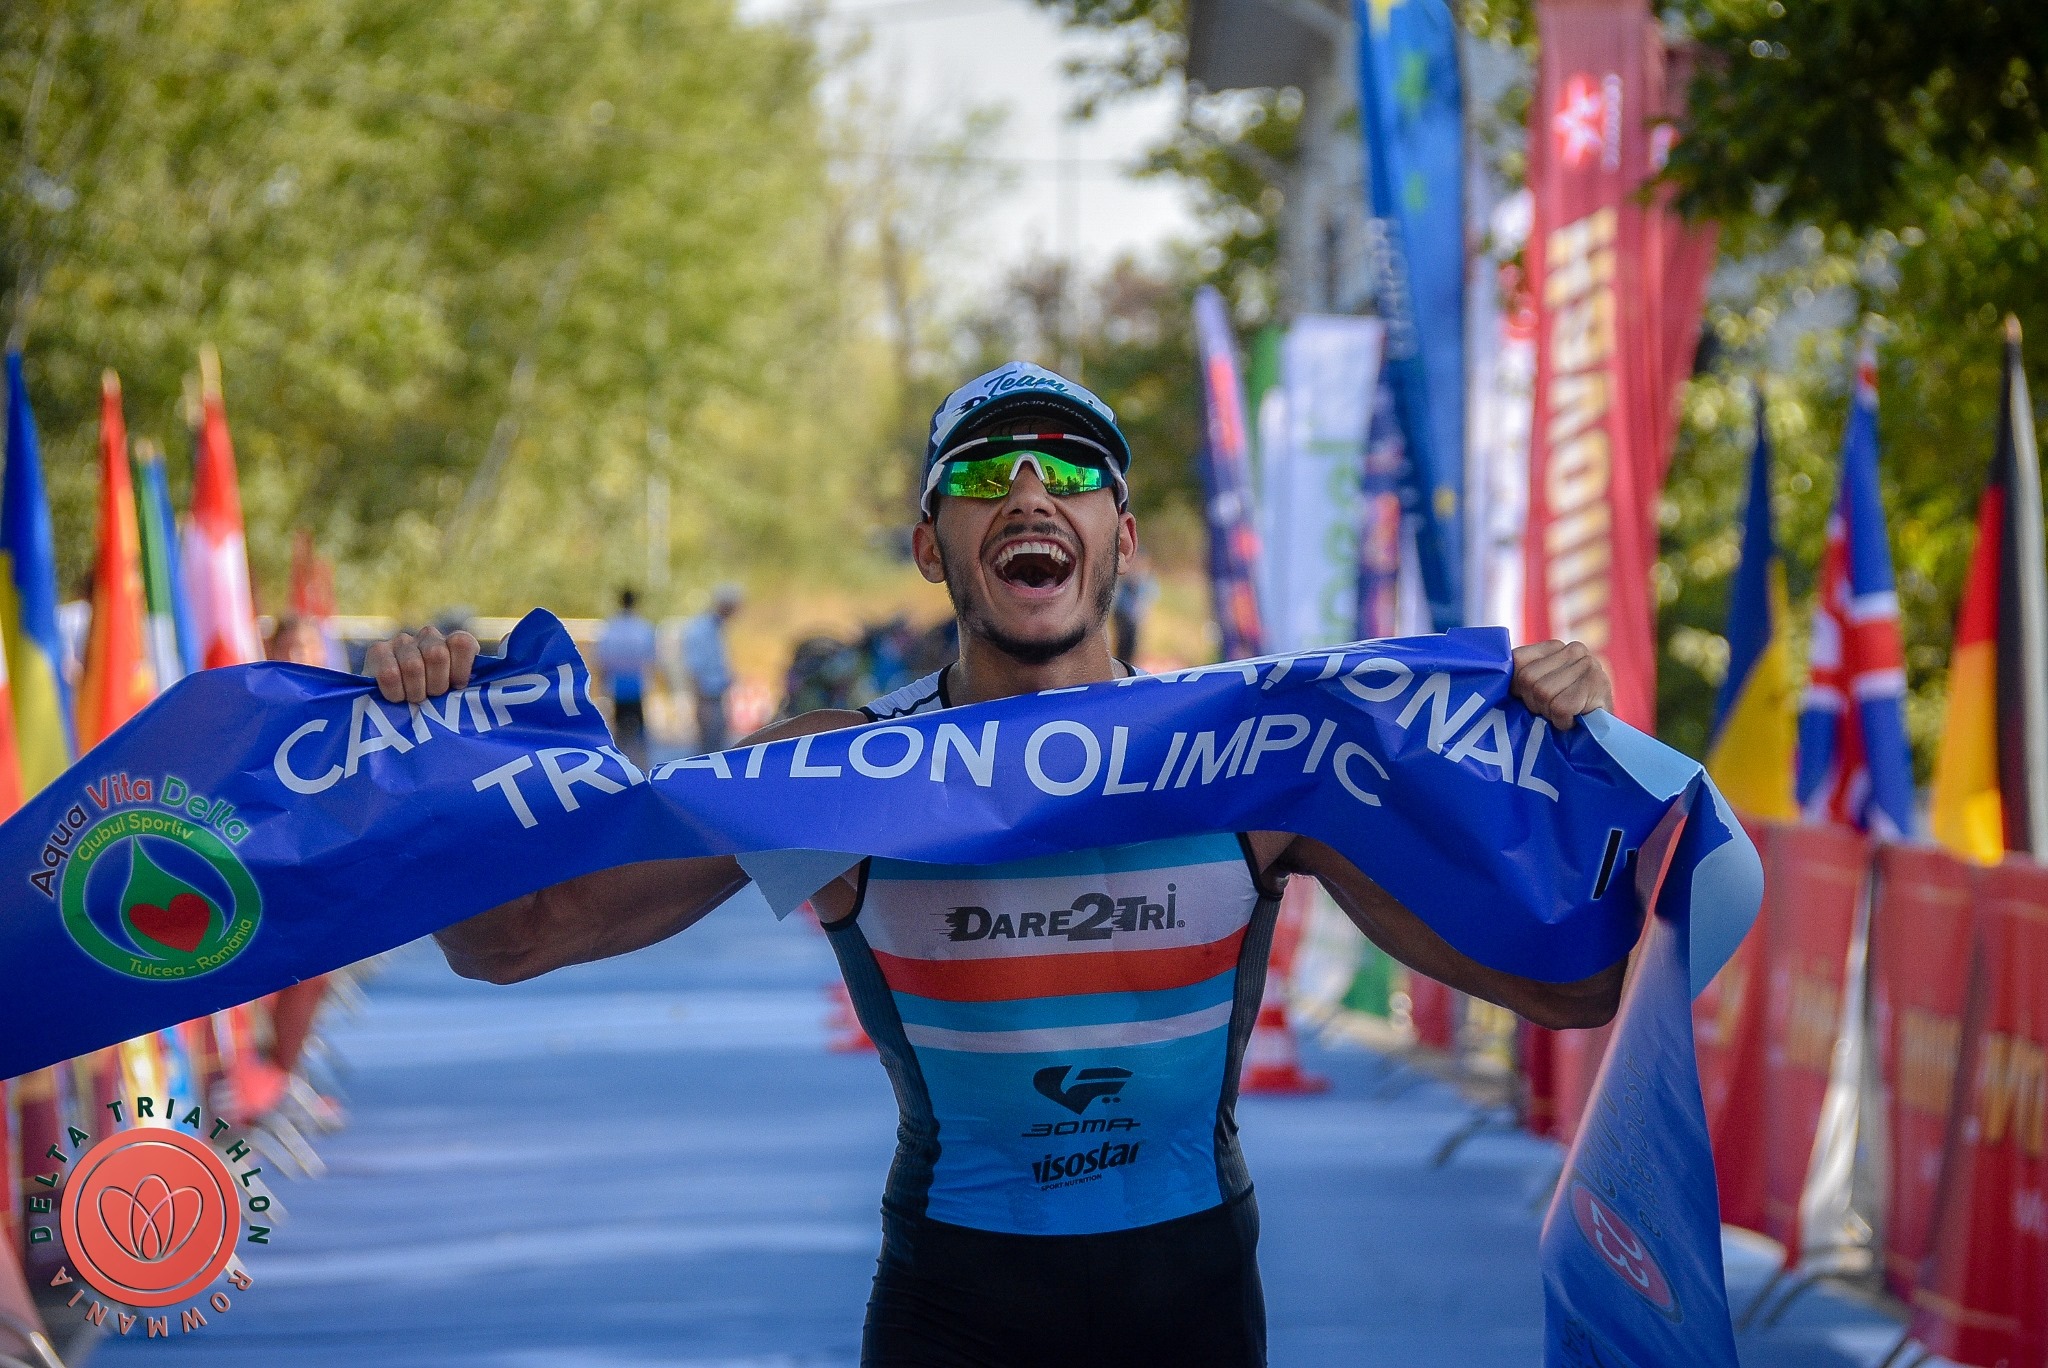 Alex Ion castiga titlul national la triatlon olimpic 2019